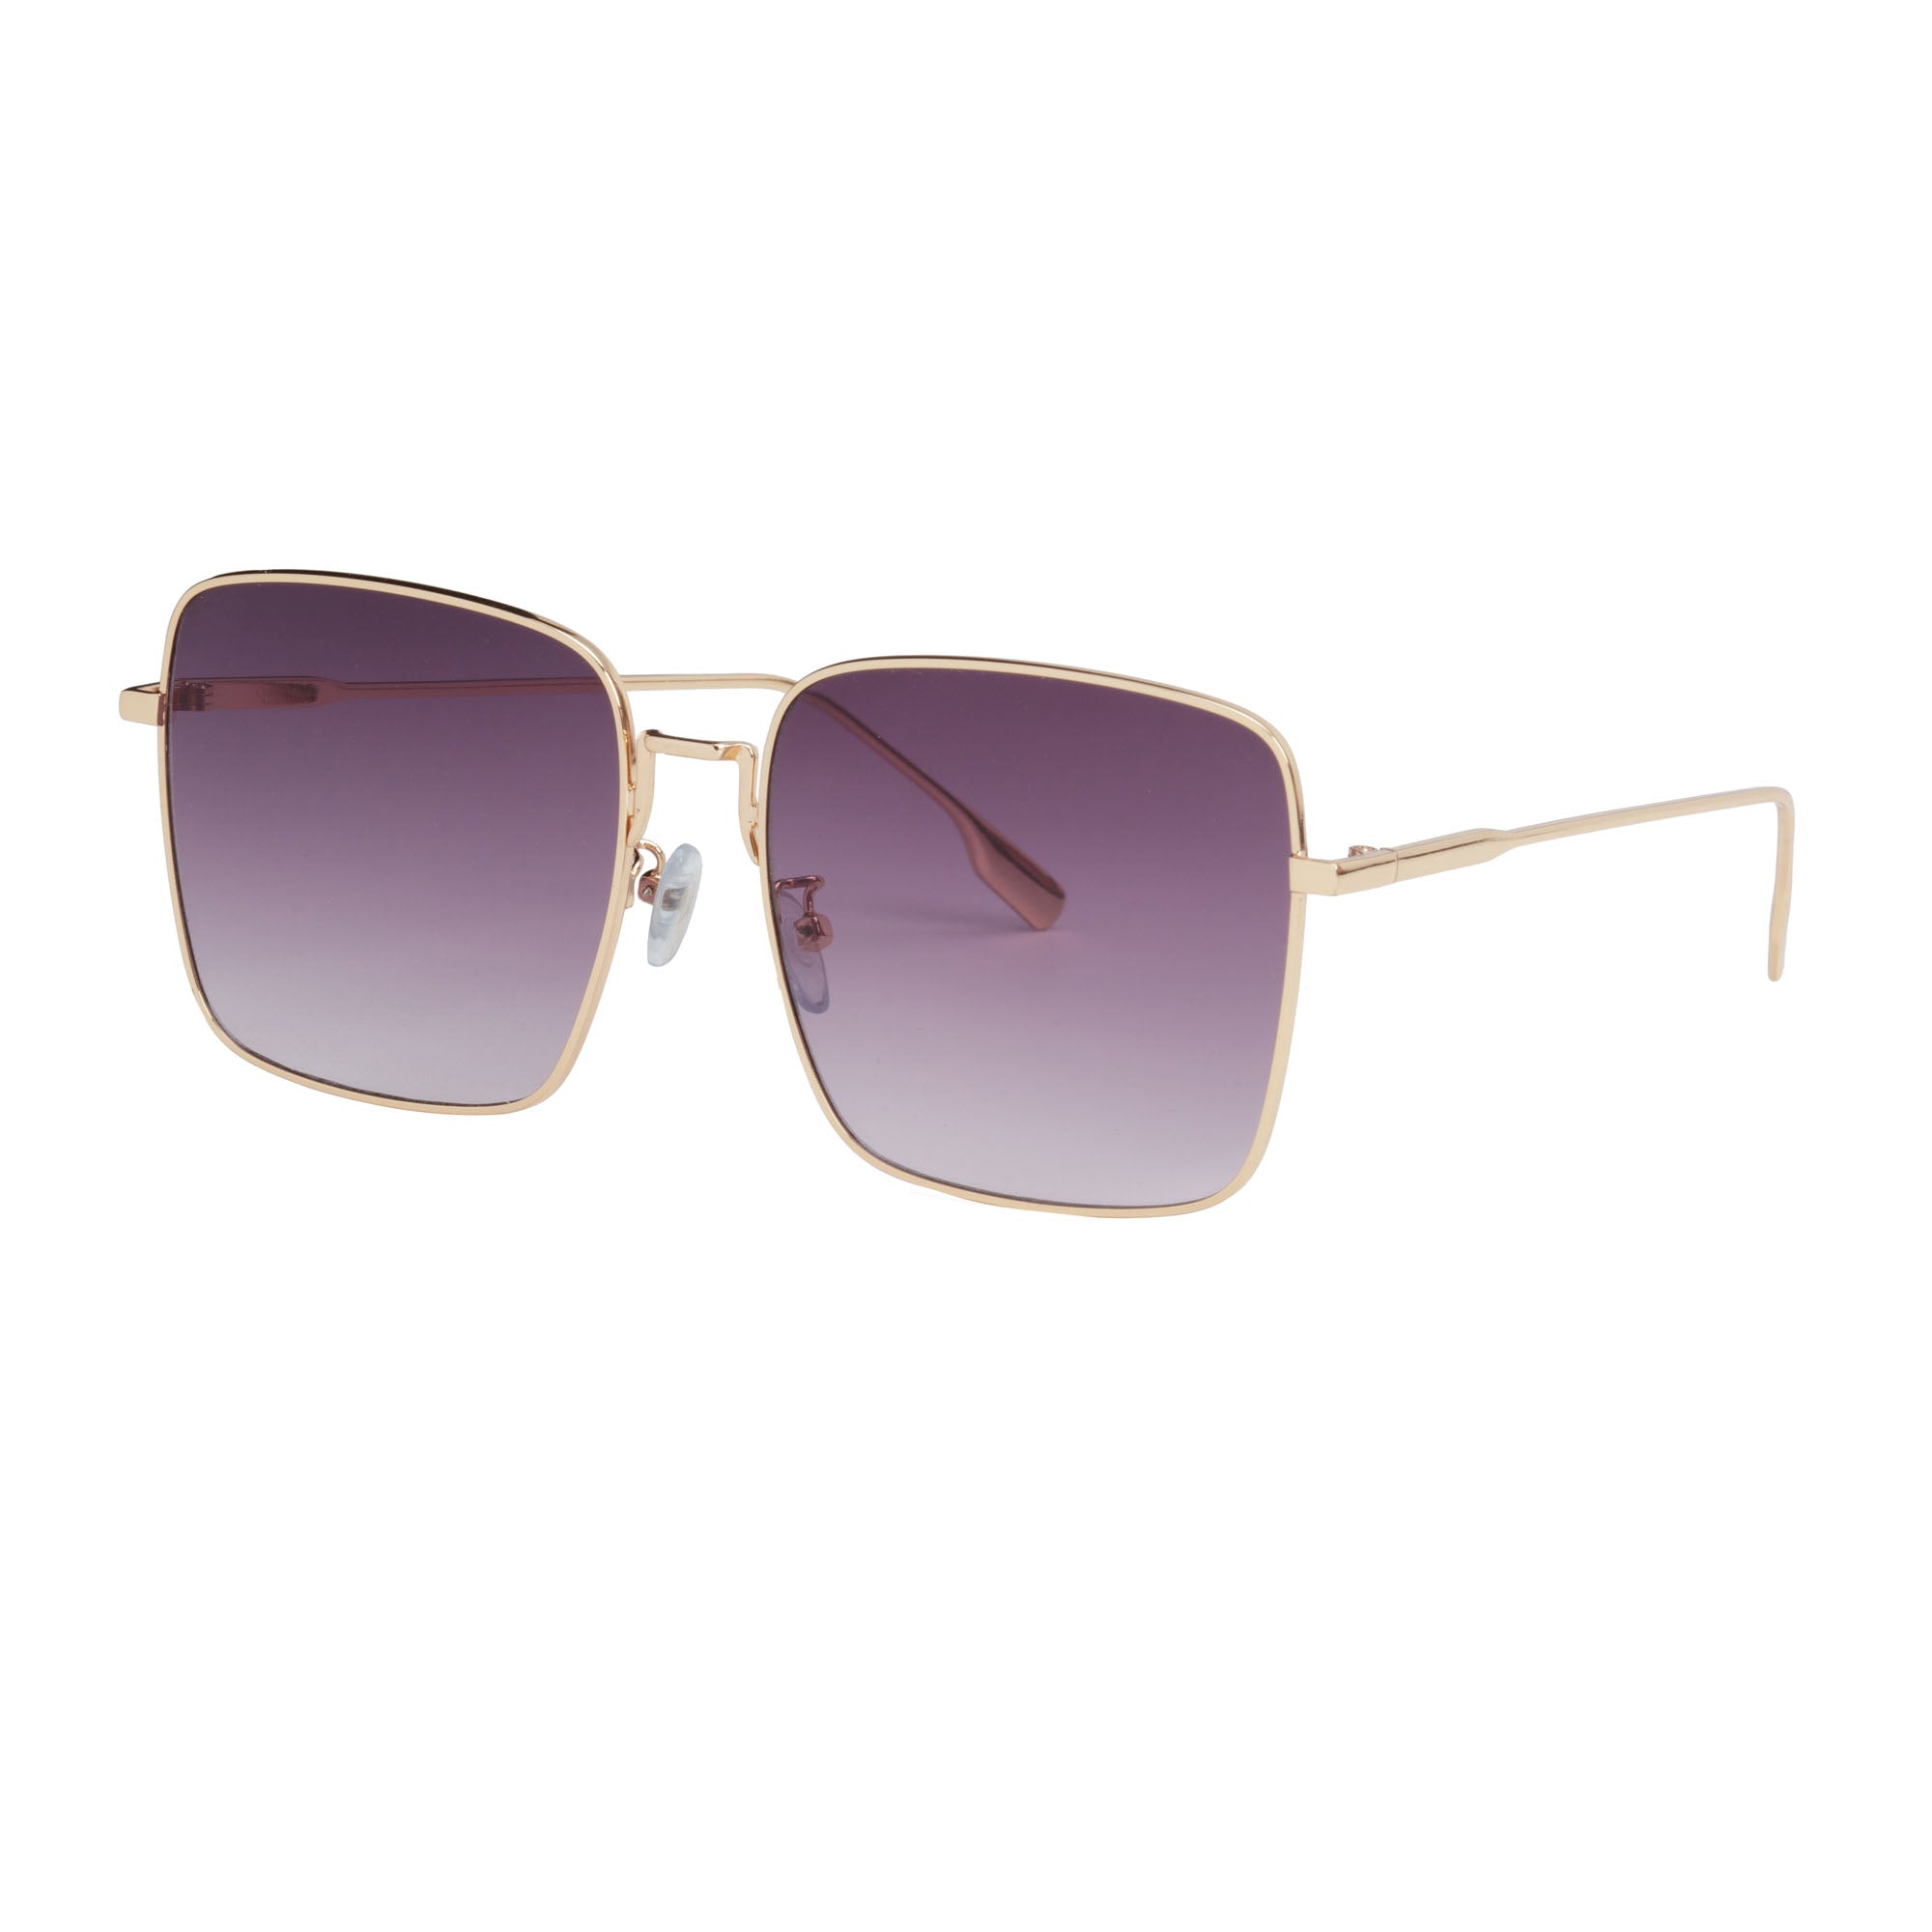 Sunglasses - EBS7010 Carmel